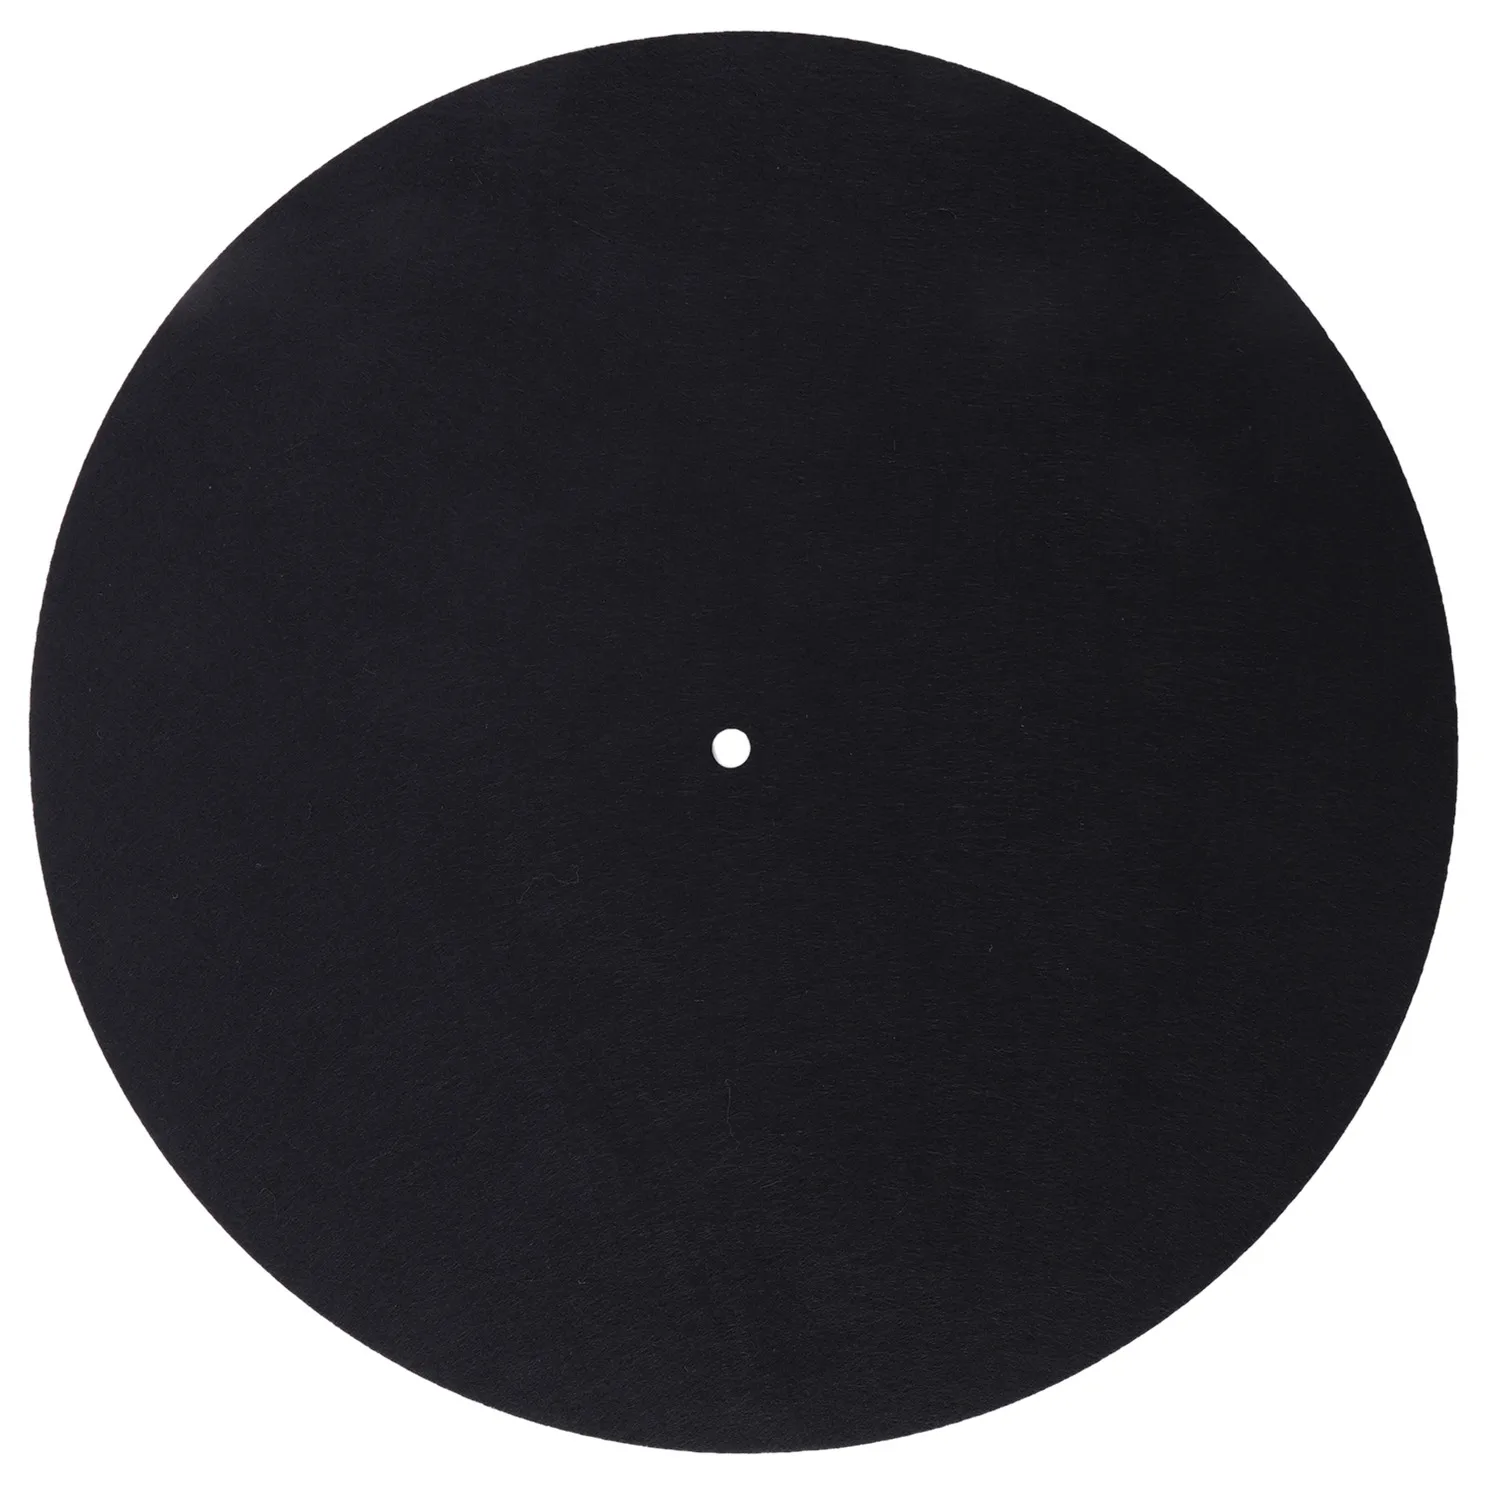 

1Pcs Ultra-Thin Anti-Static Lp Vinyl Turntable Record Player Pad For Phonographs Flat Soft Mat Record Slipmat Mat Pad